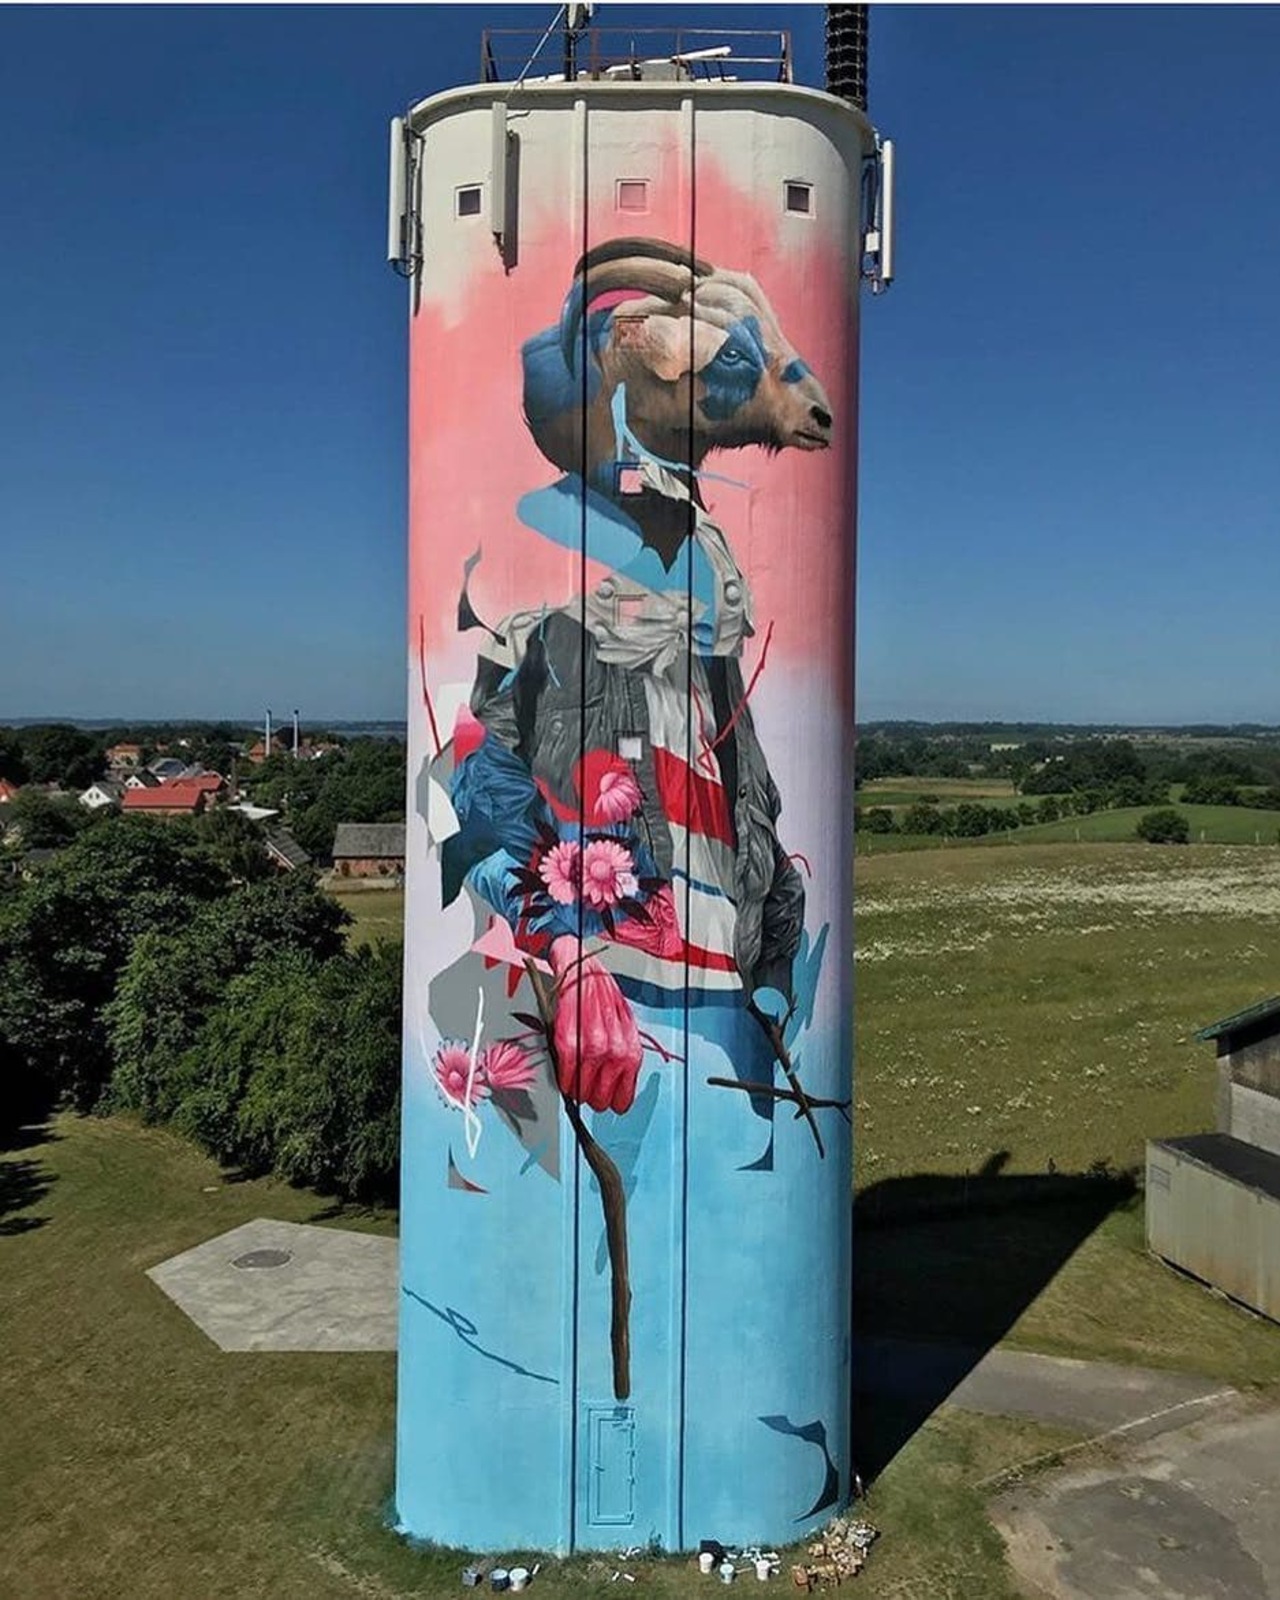 Stunning Street Art by joramroukes in Denmark. ▪ ▪ ▪ #art #artists #artlovers #streetart #muralart #graffiti #urbanart #Denmark #joramroukes #urbanmural #graffitiart #spraypaint #mural #photography https://t.co/AsH3kEWZQQ